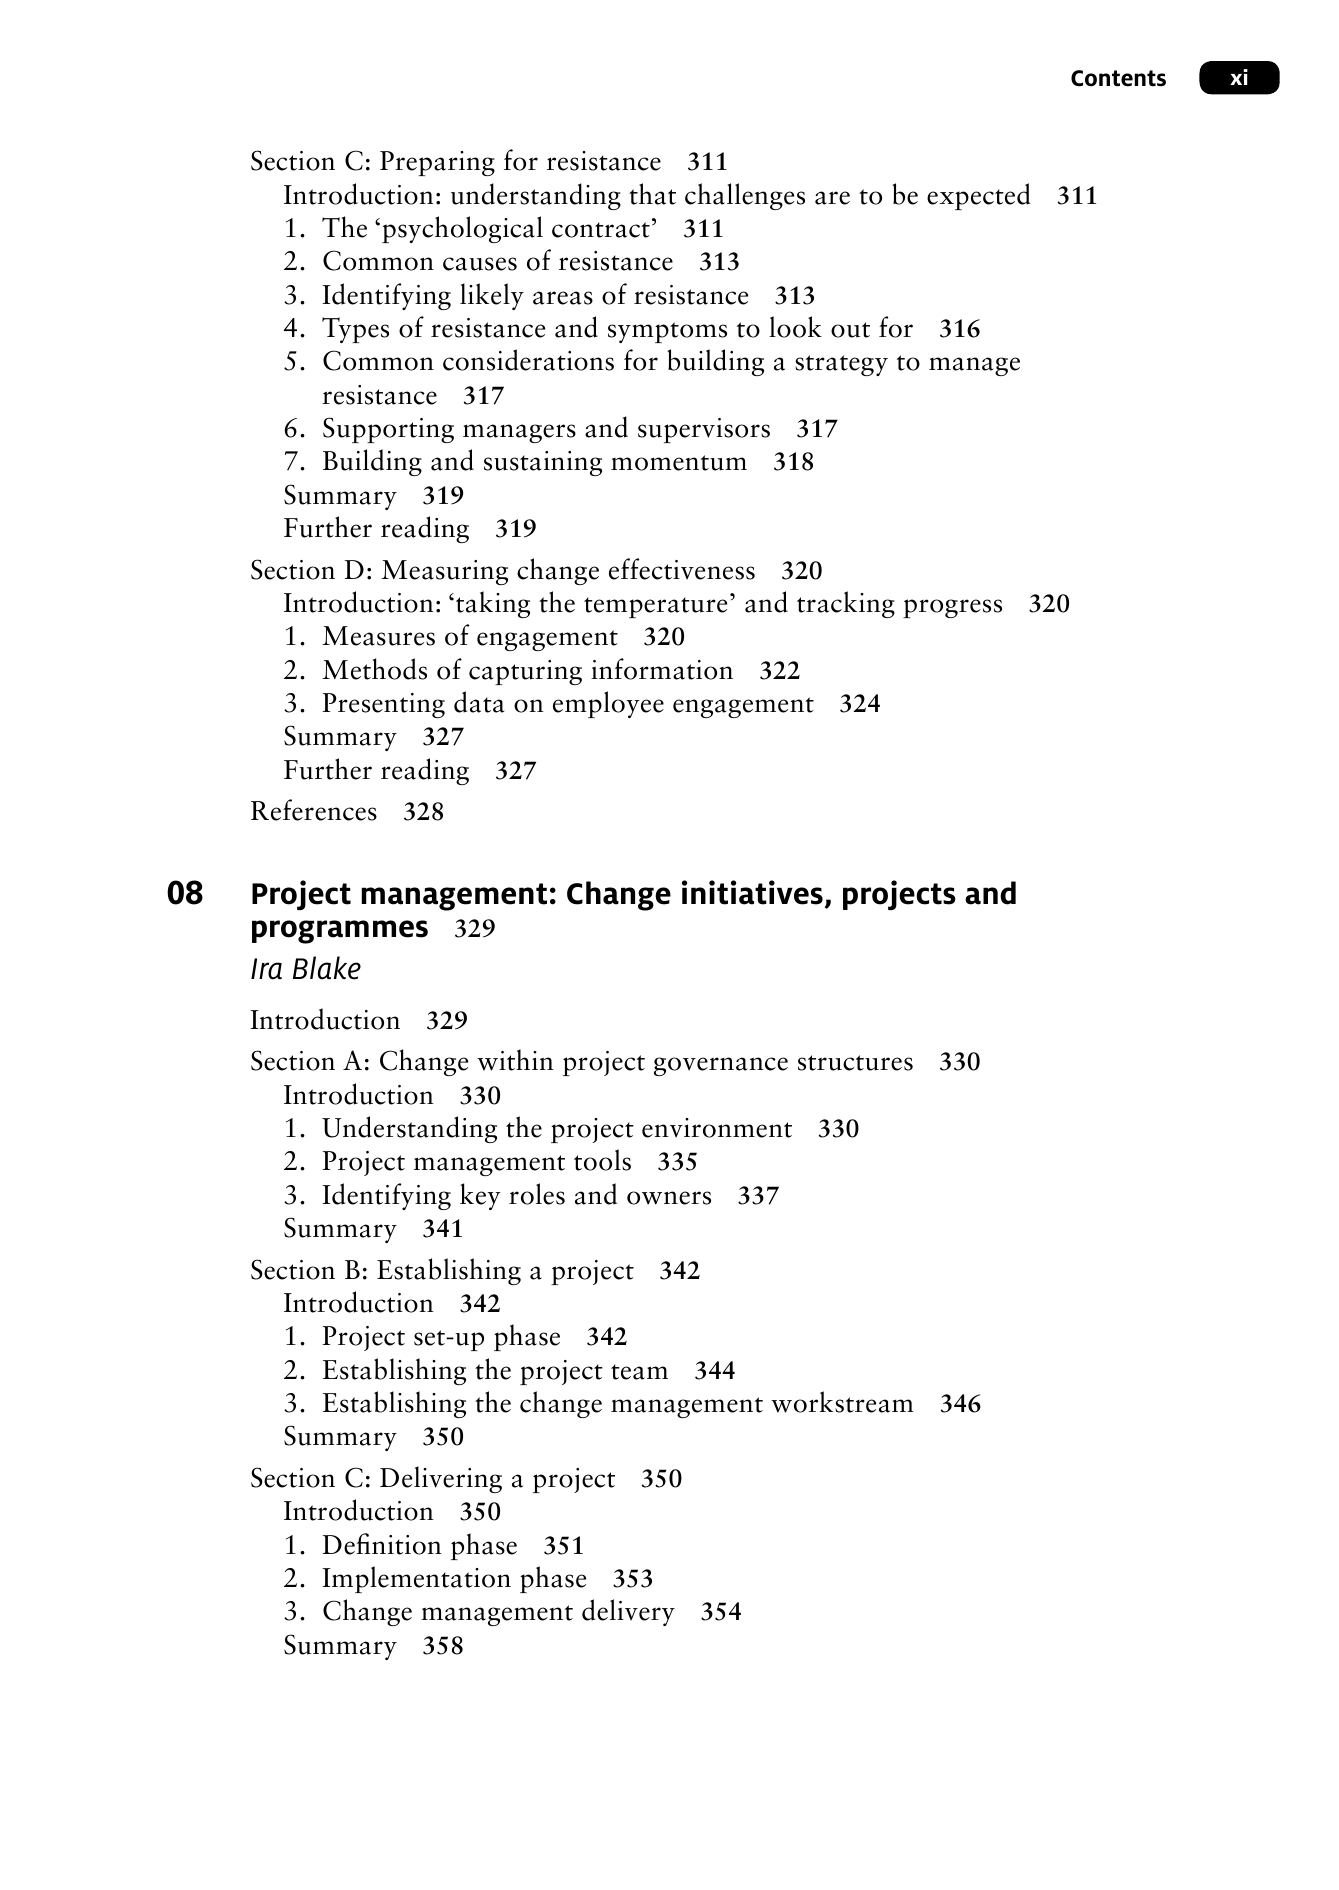 CMF官方教材：《The Effective Change Manager’s Handbook》及变革管理知识体系介绍 -- 第9张